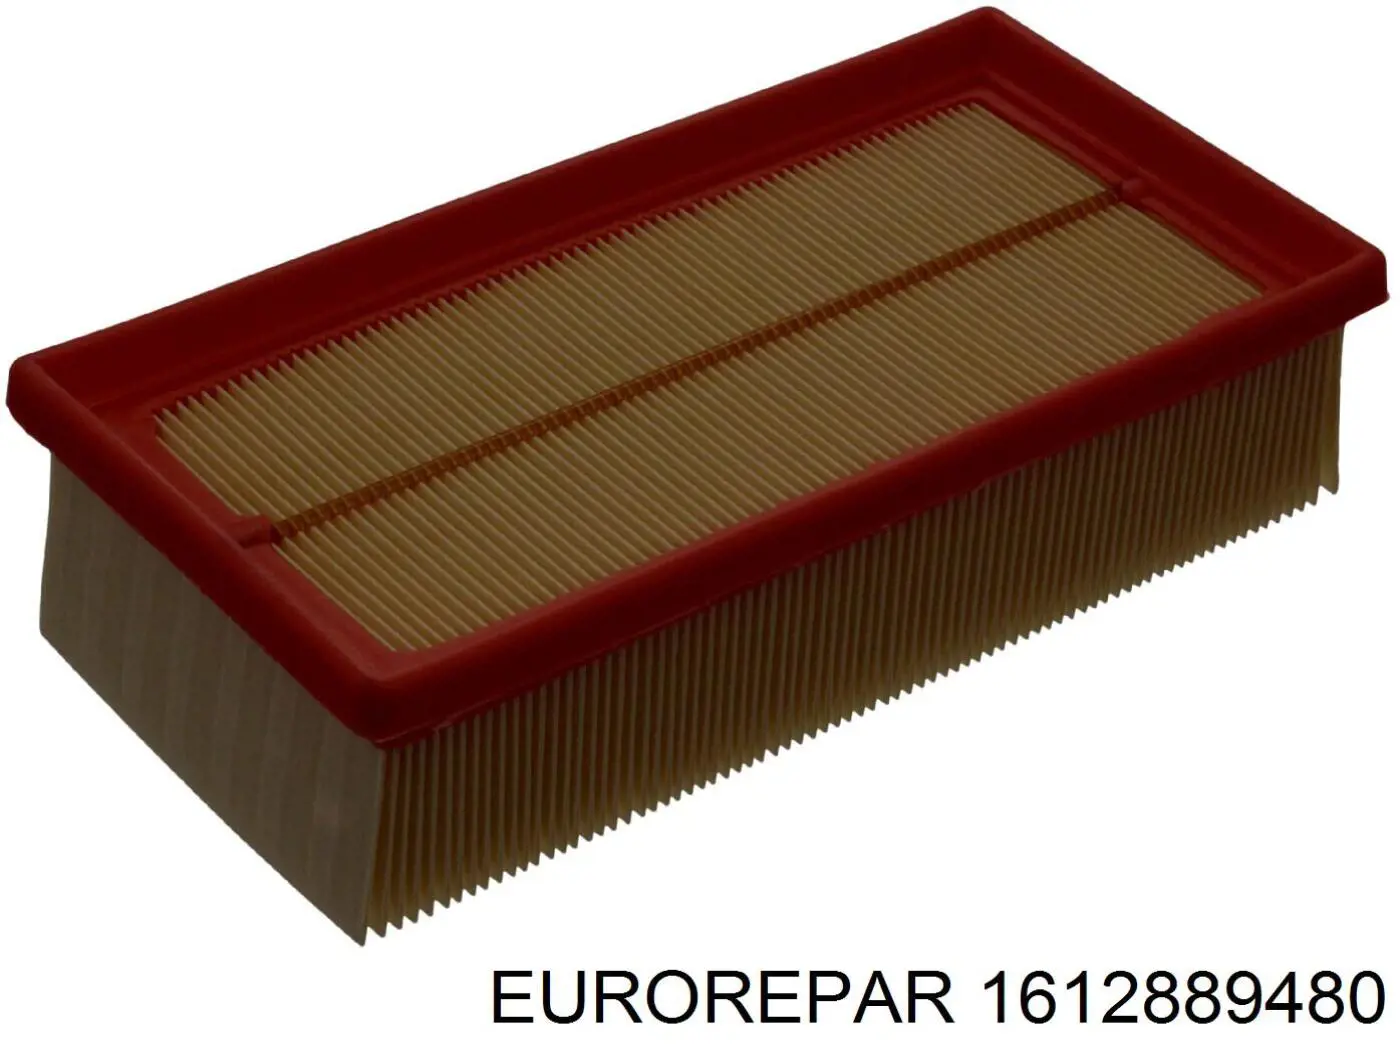 1612889480 Eurorepar filtro de aire